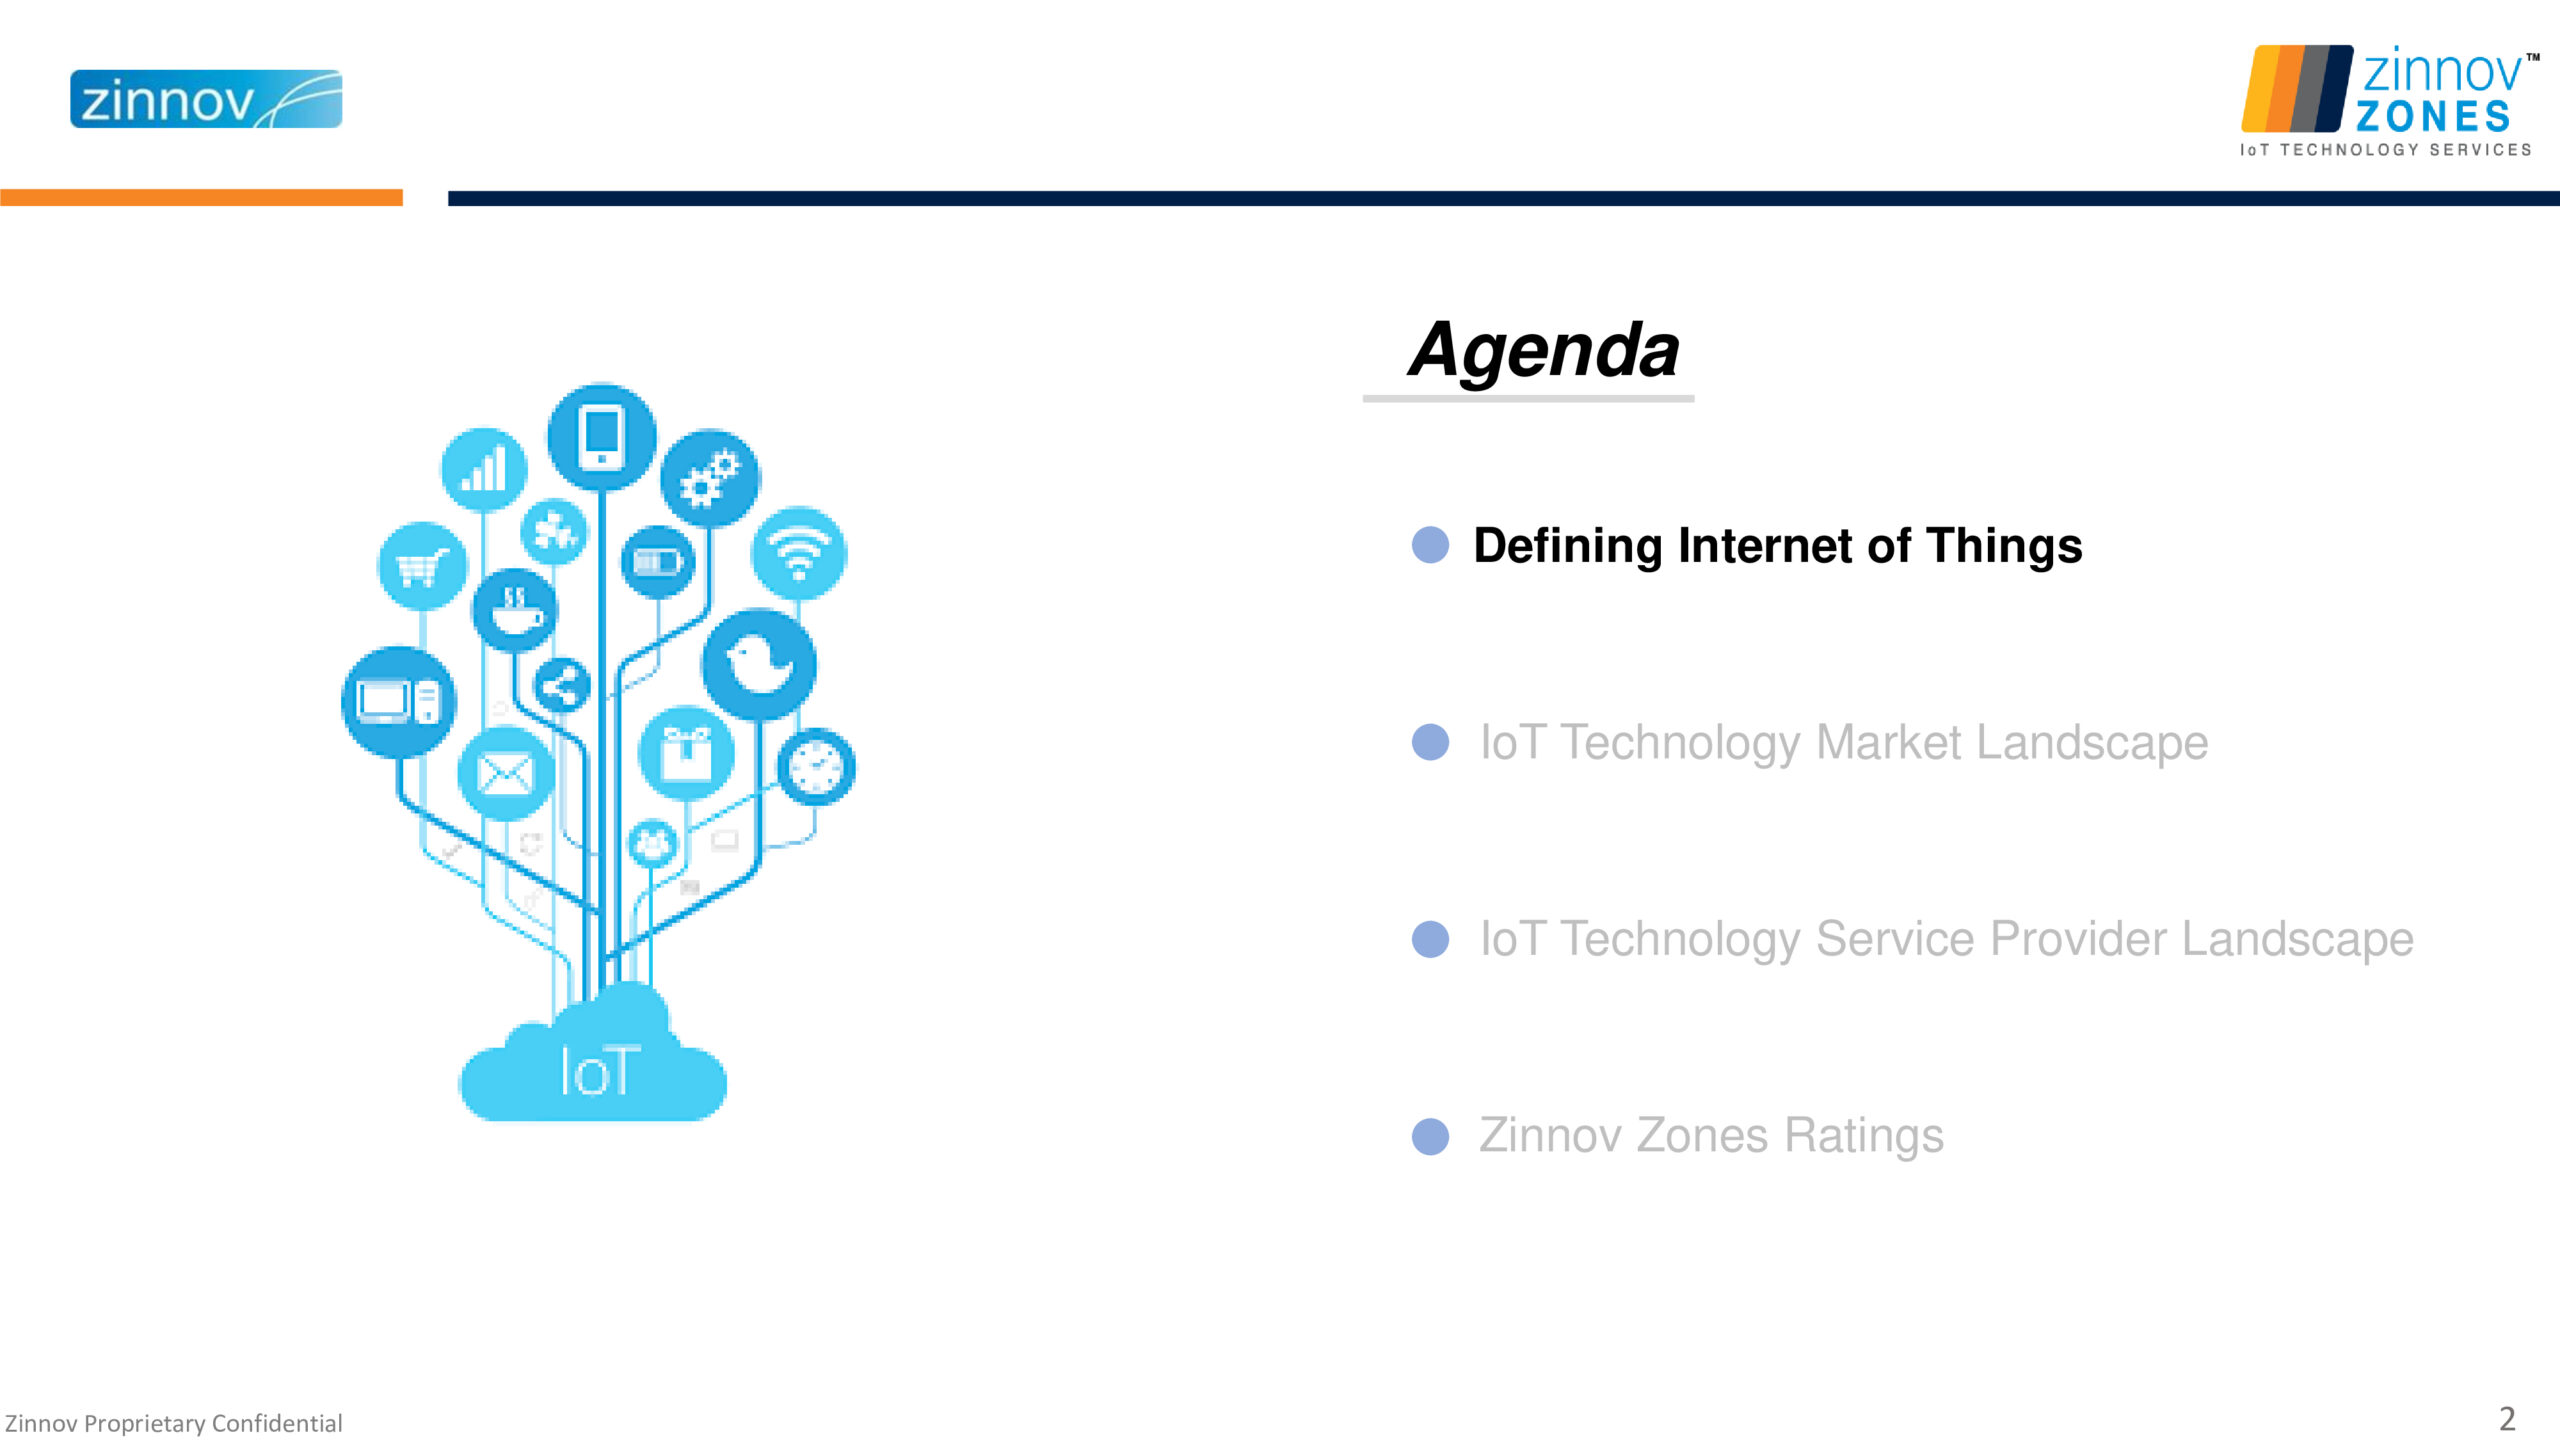 Zinnov Zones 2017 Iot Services Report2 Scaled